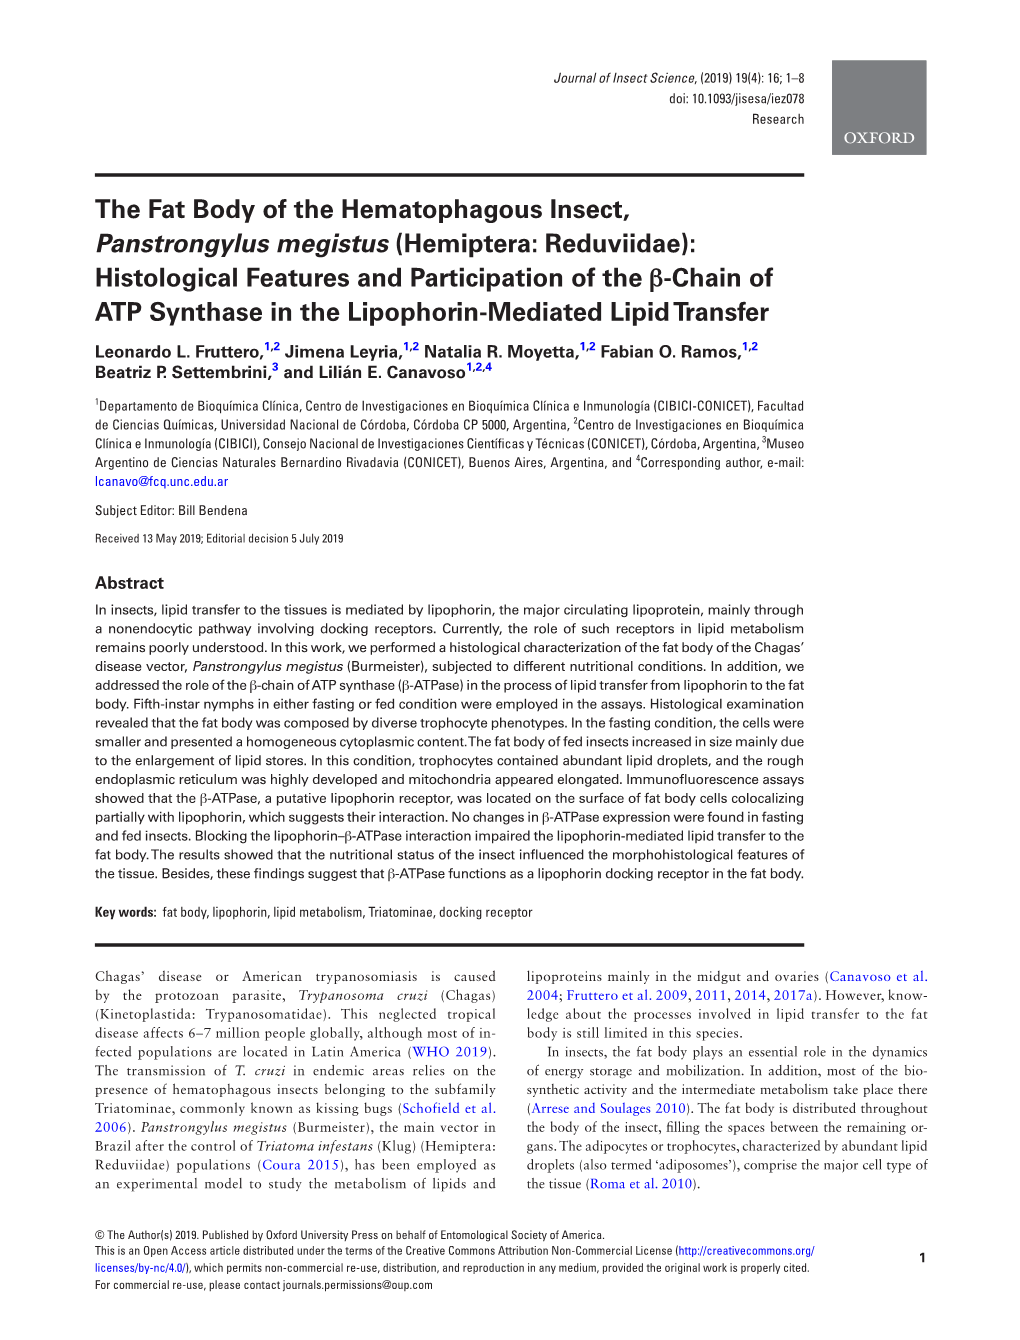 The Fat Body of the Hematophagous Insect, Panstrongylus Megistus